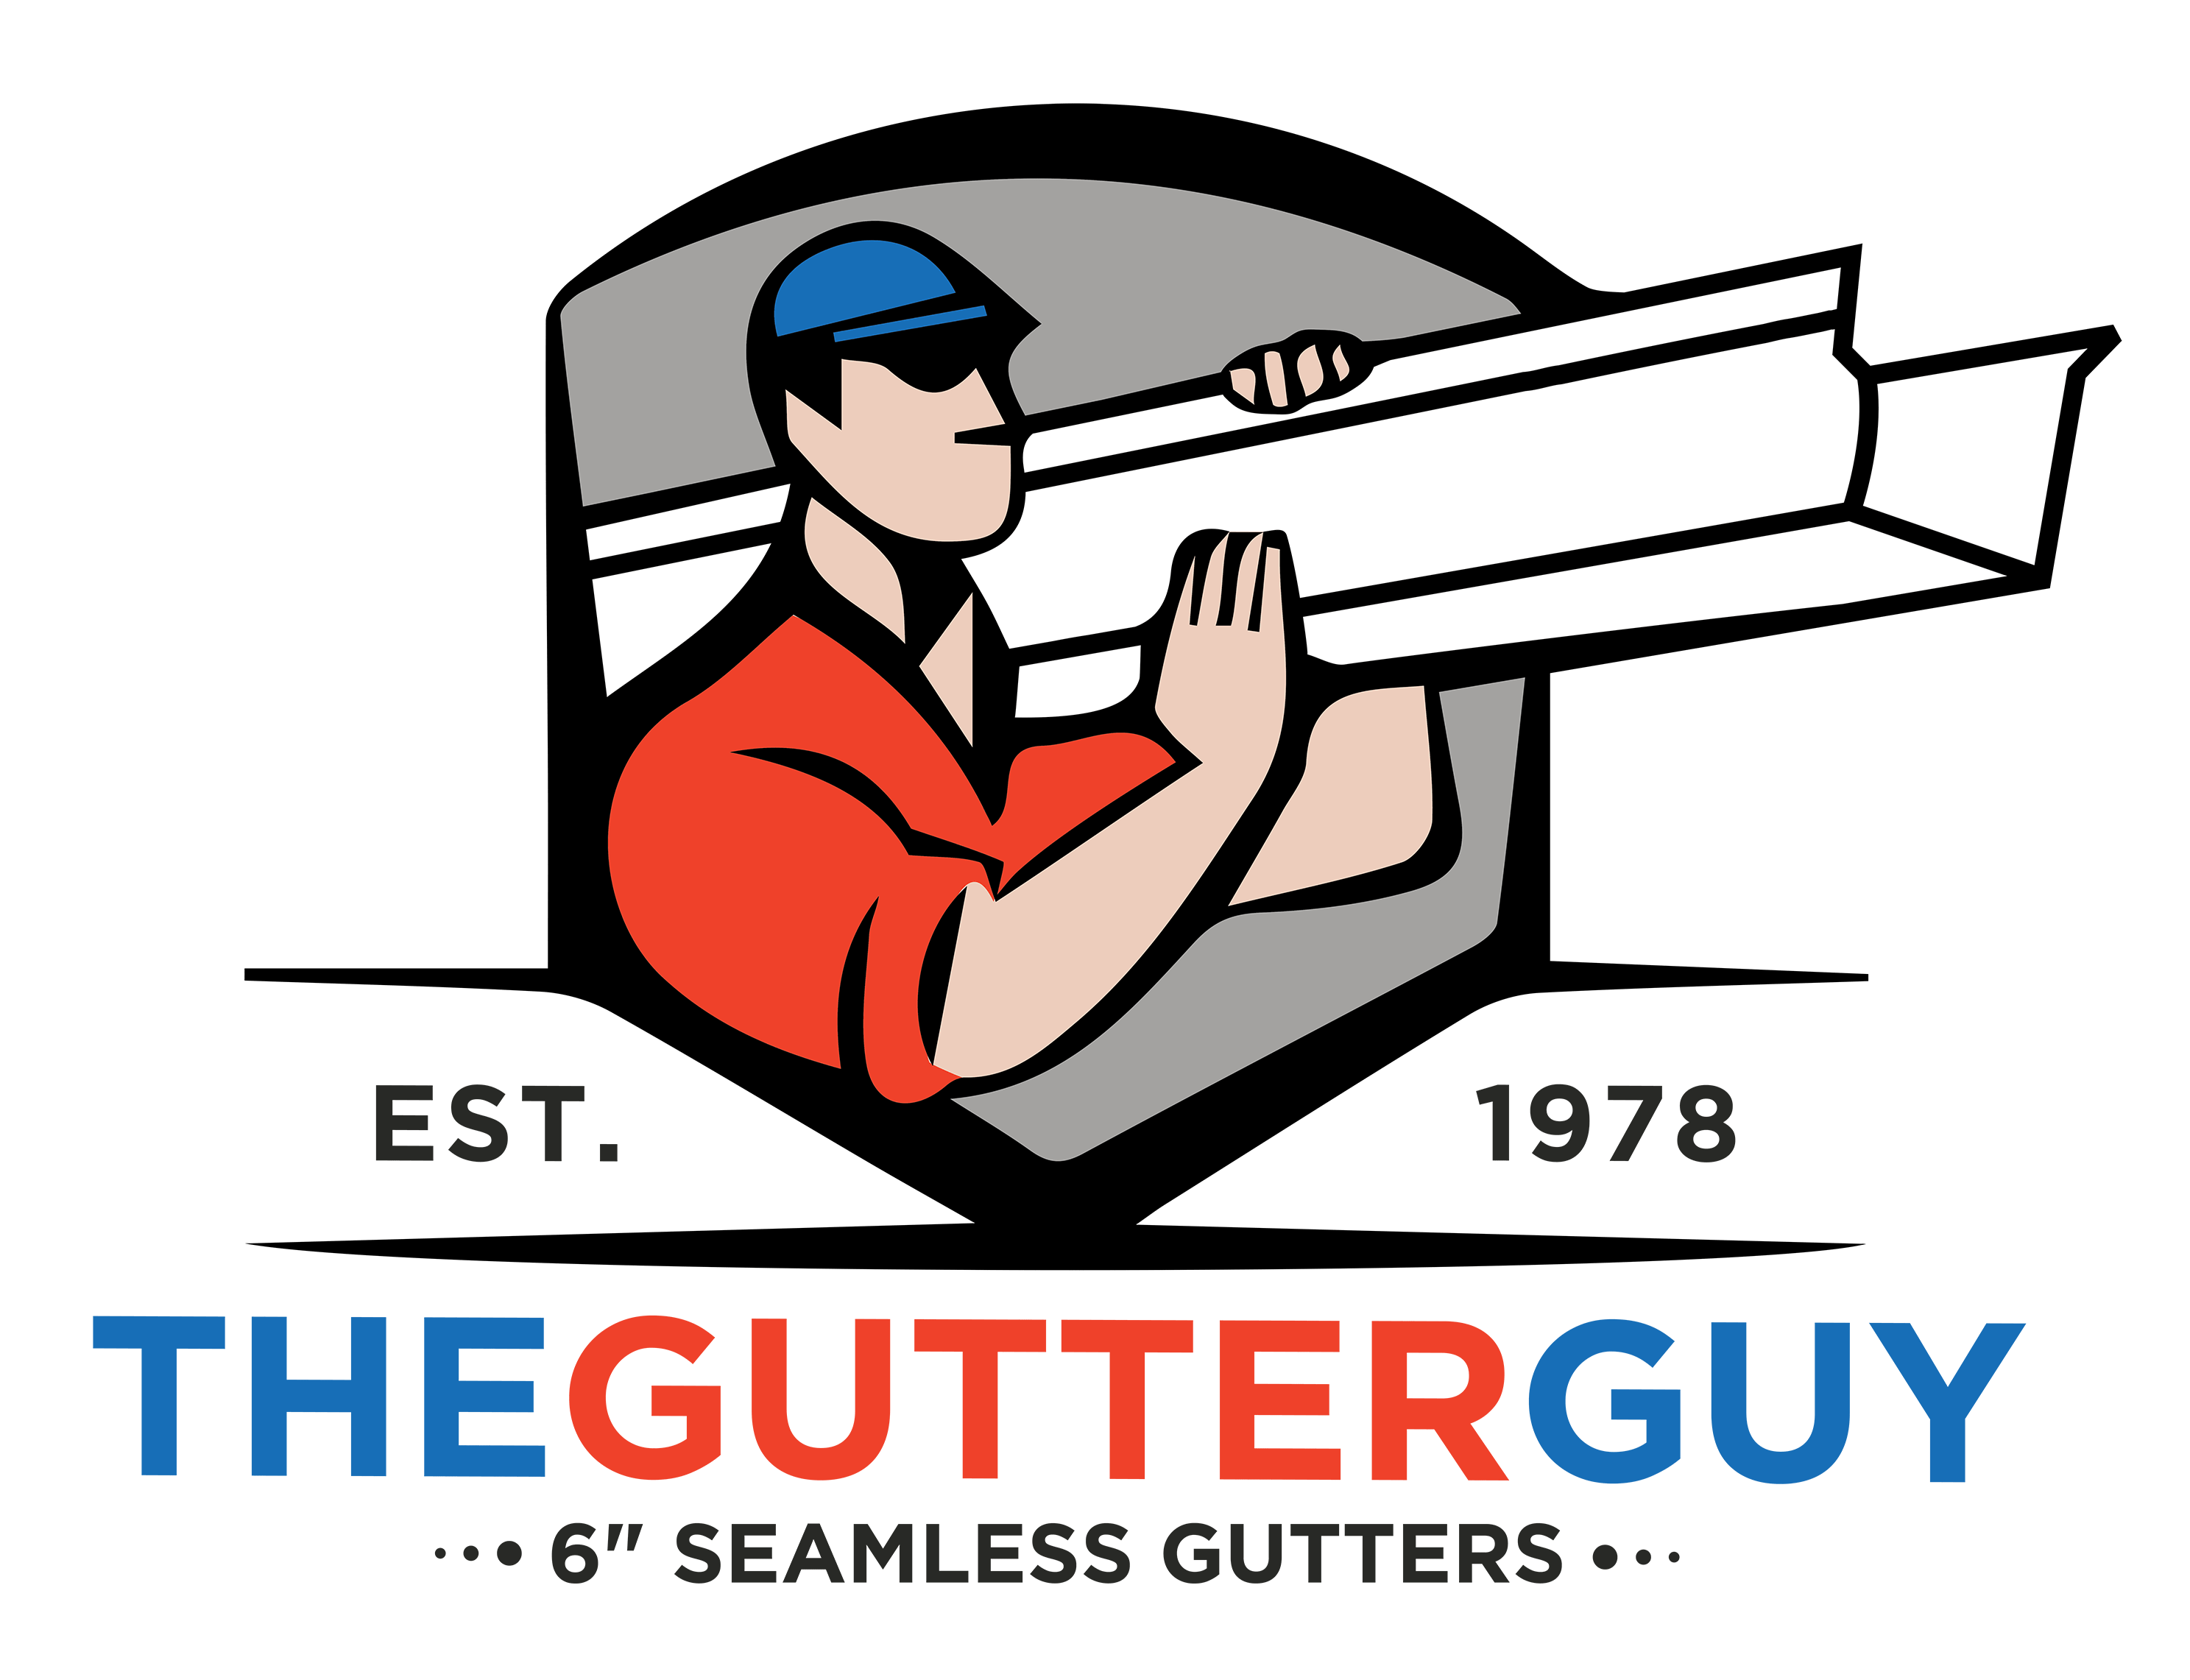 Gutter Logo - The Gutter Guy. Gutter Guy. Good Call